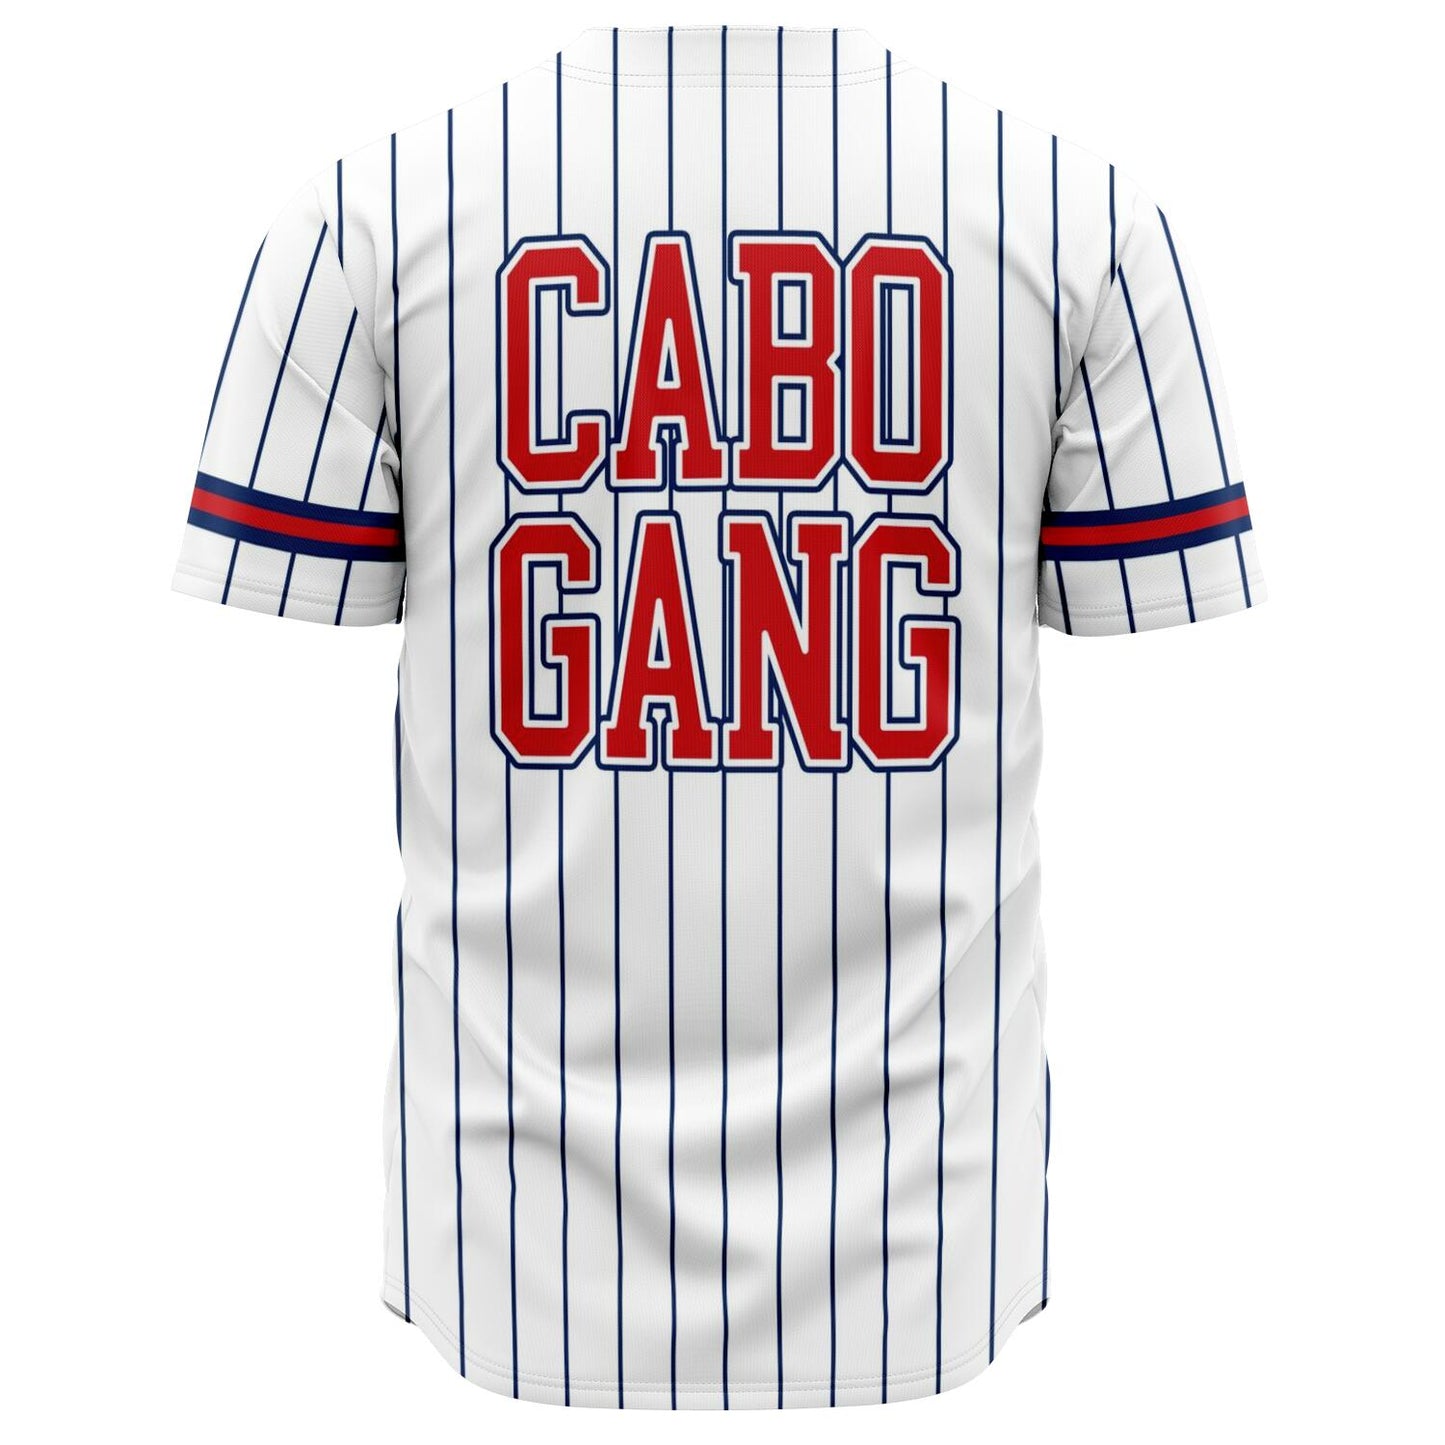 Cabo verde baseball jersey white & red "CABOGANG" - CVC Streetwear